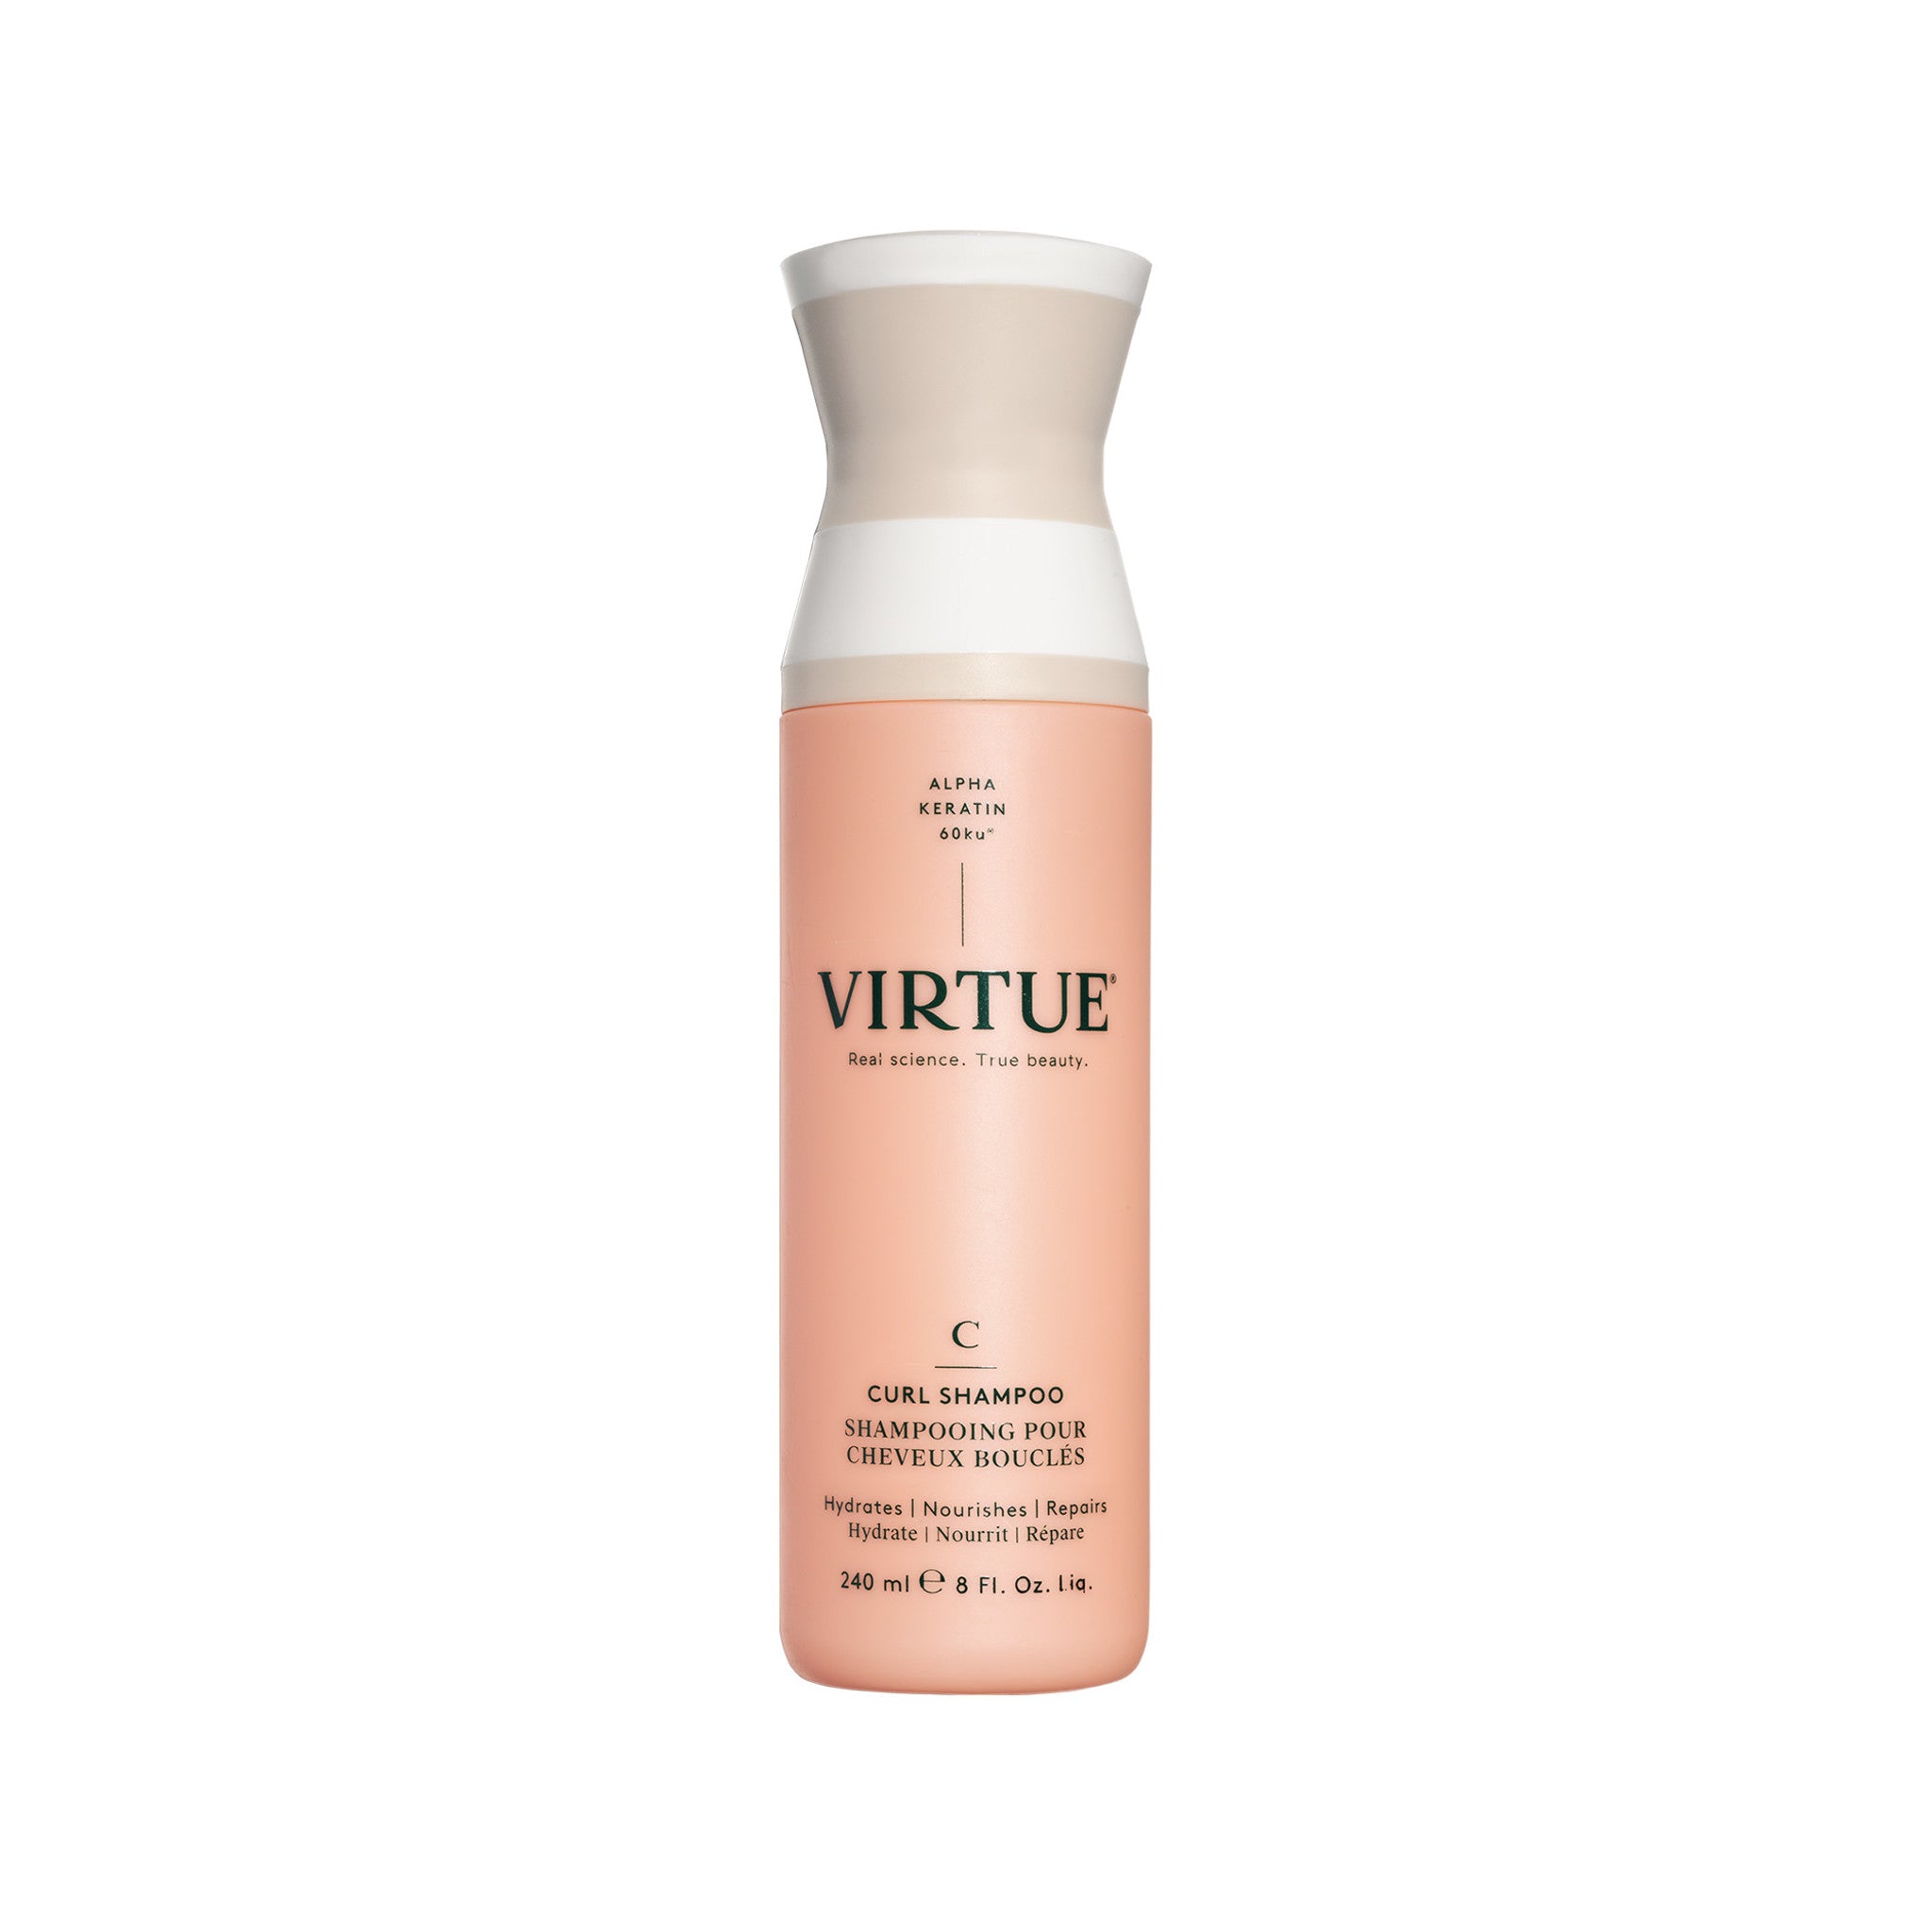 Virtue Curl Shampoo Size variant: 8 oz | 240 ml main image.